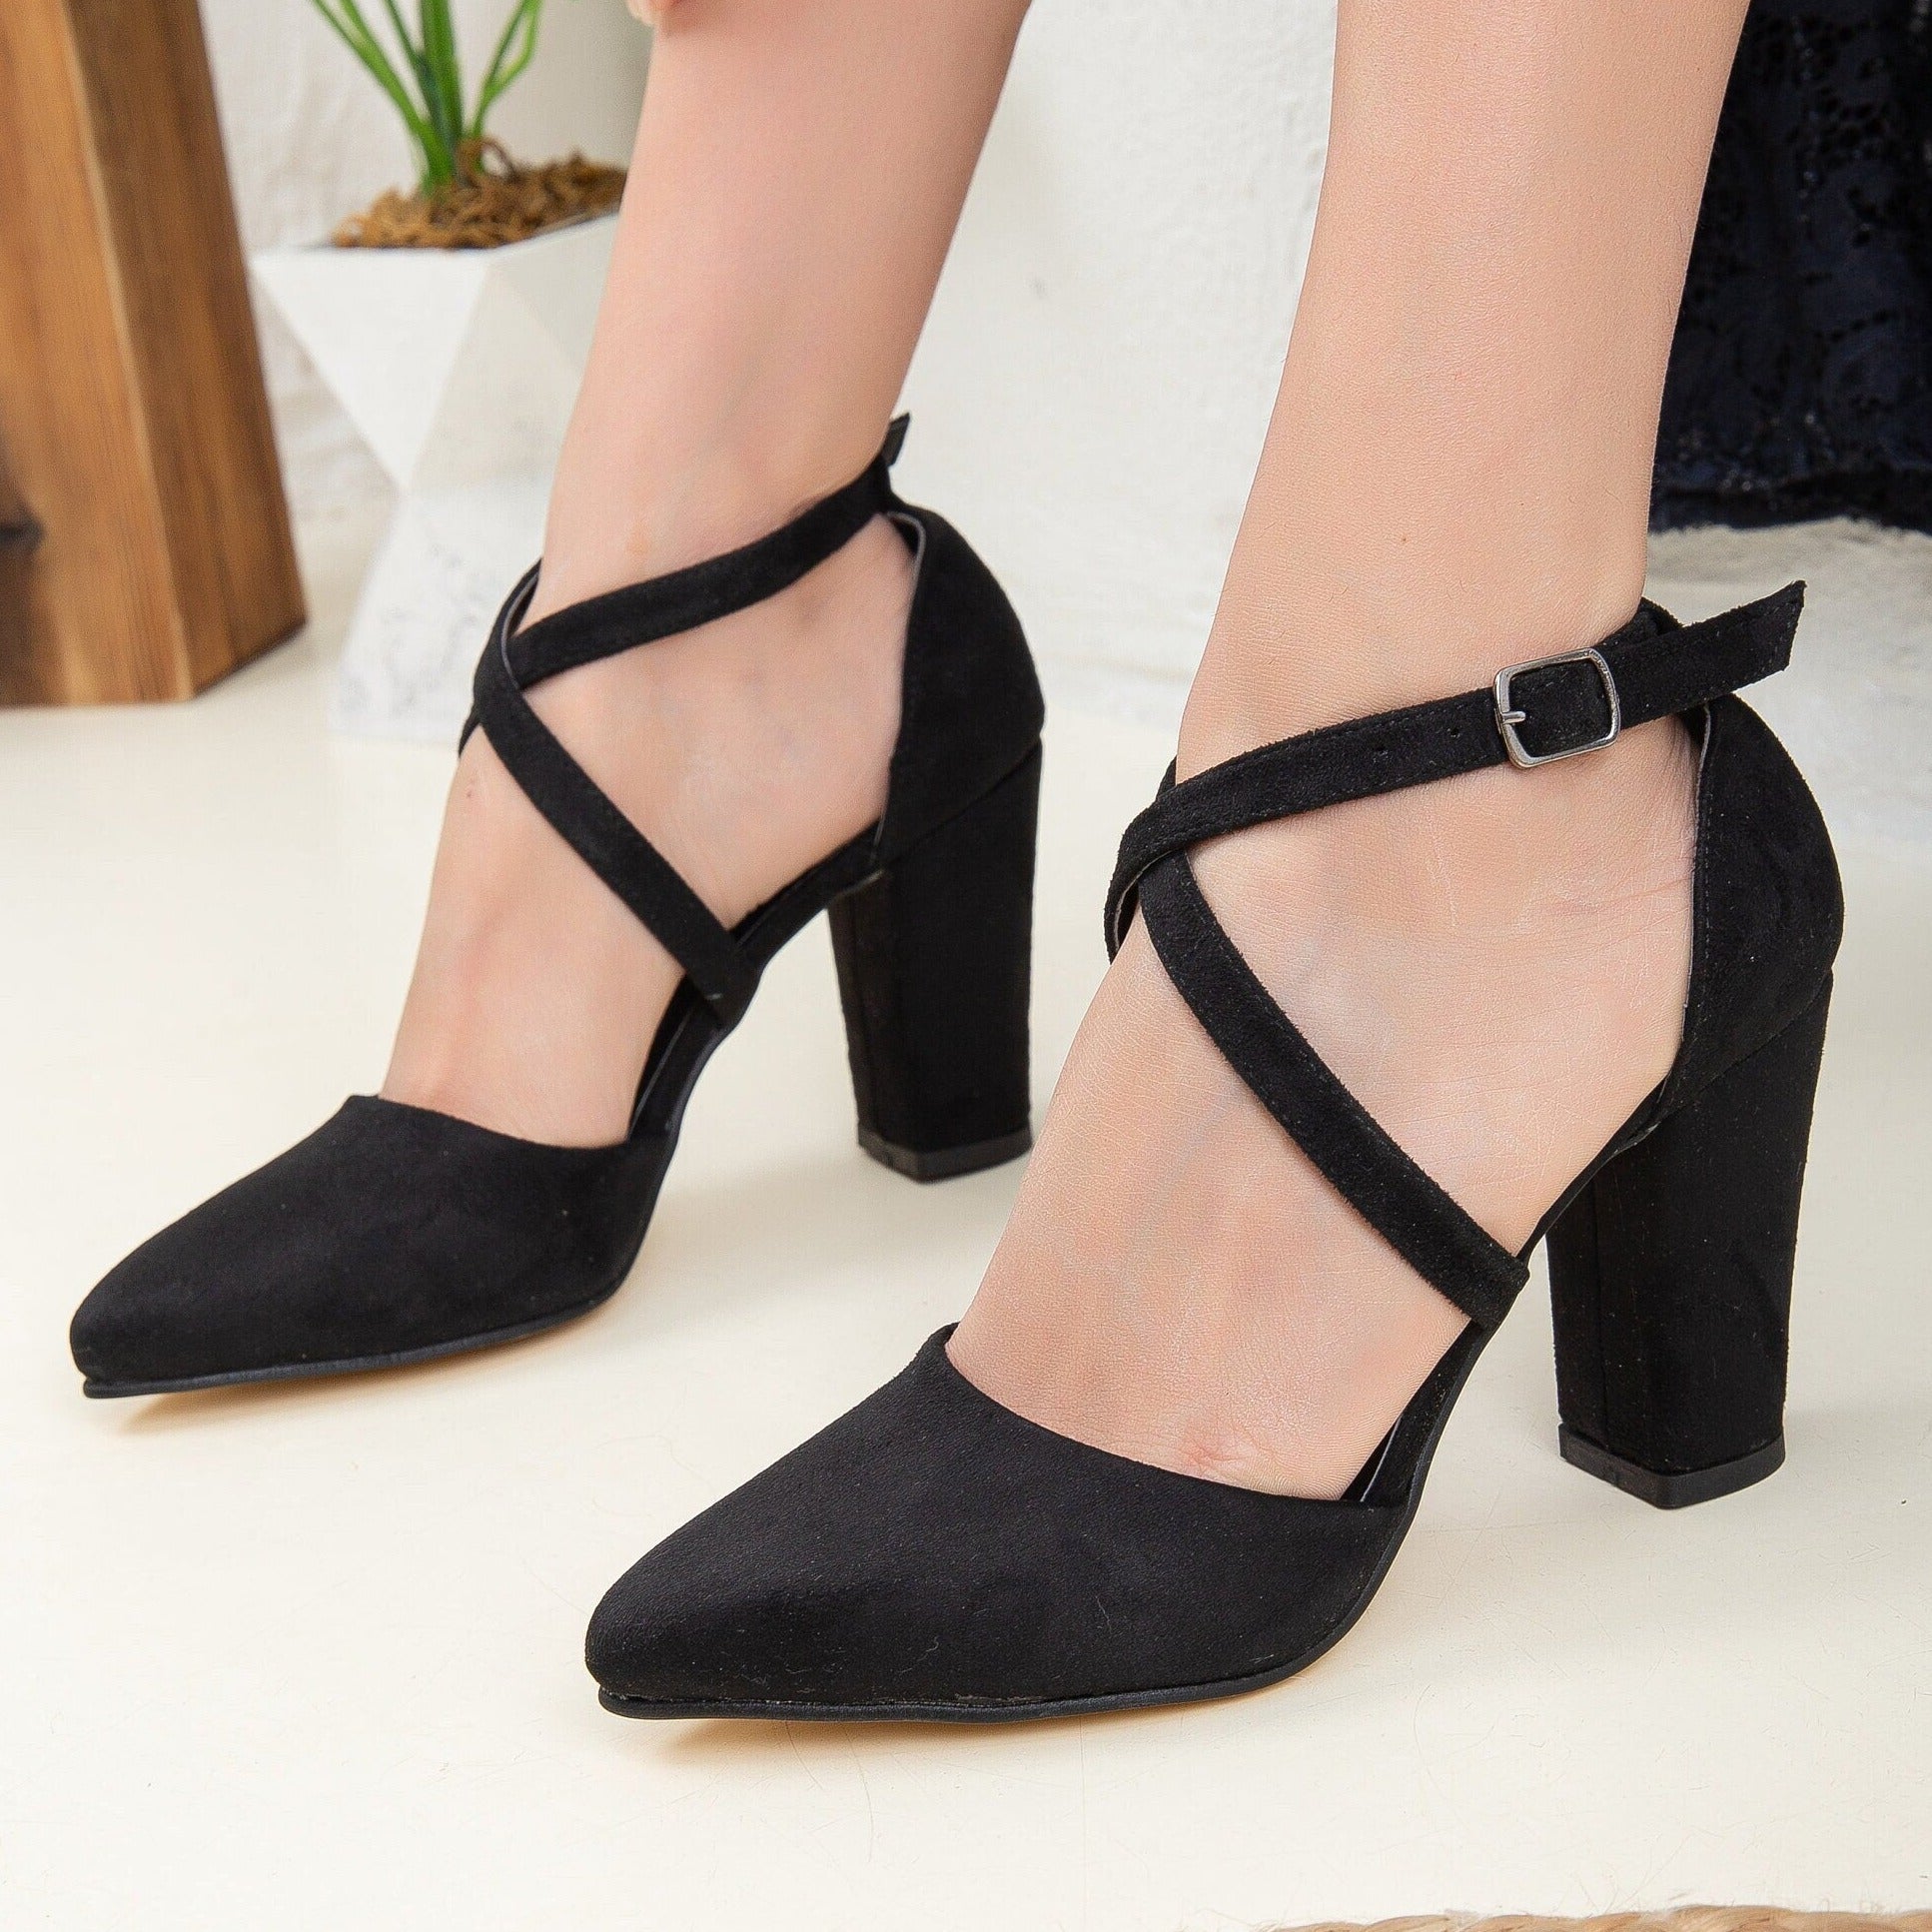 Black Stiletto Heel - Ankle Strap Heels - Pointed-Toe Pumps - Lulus